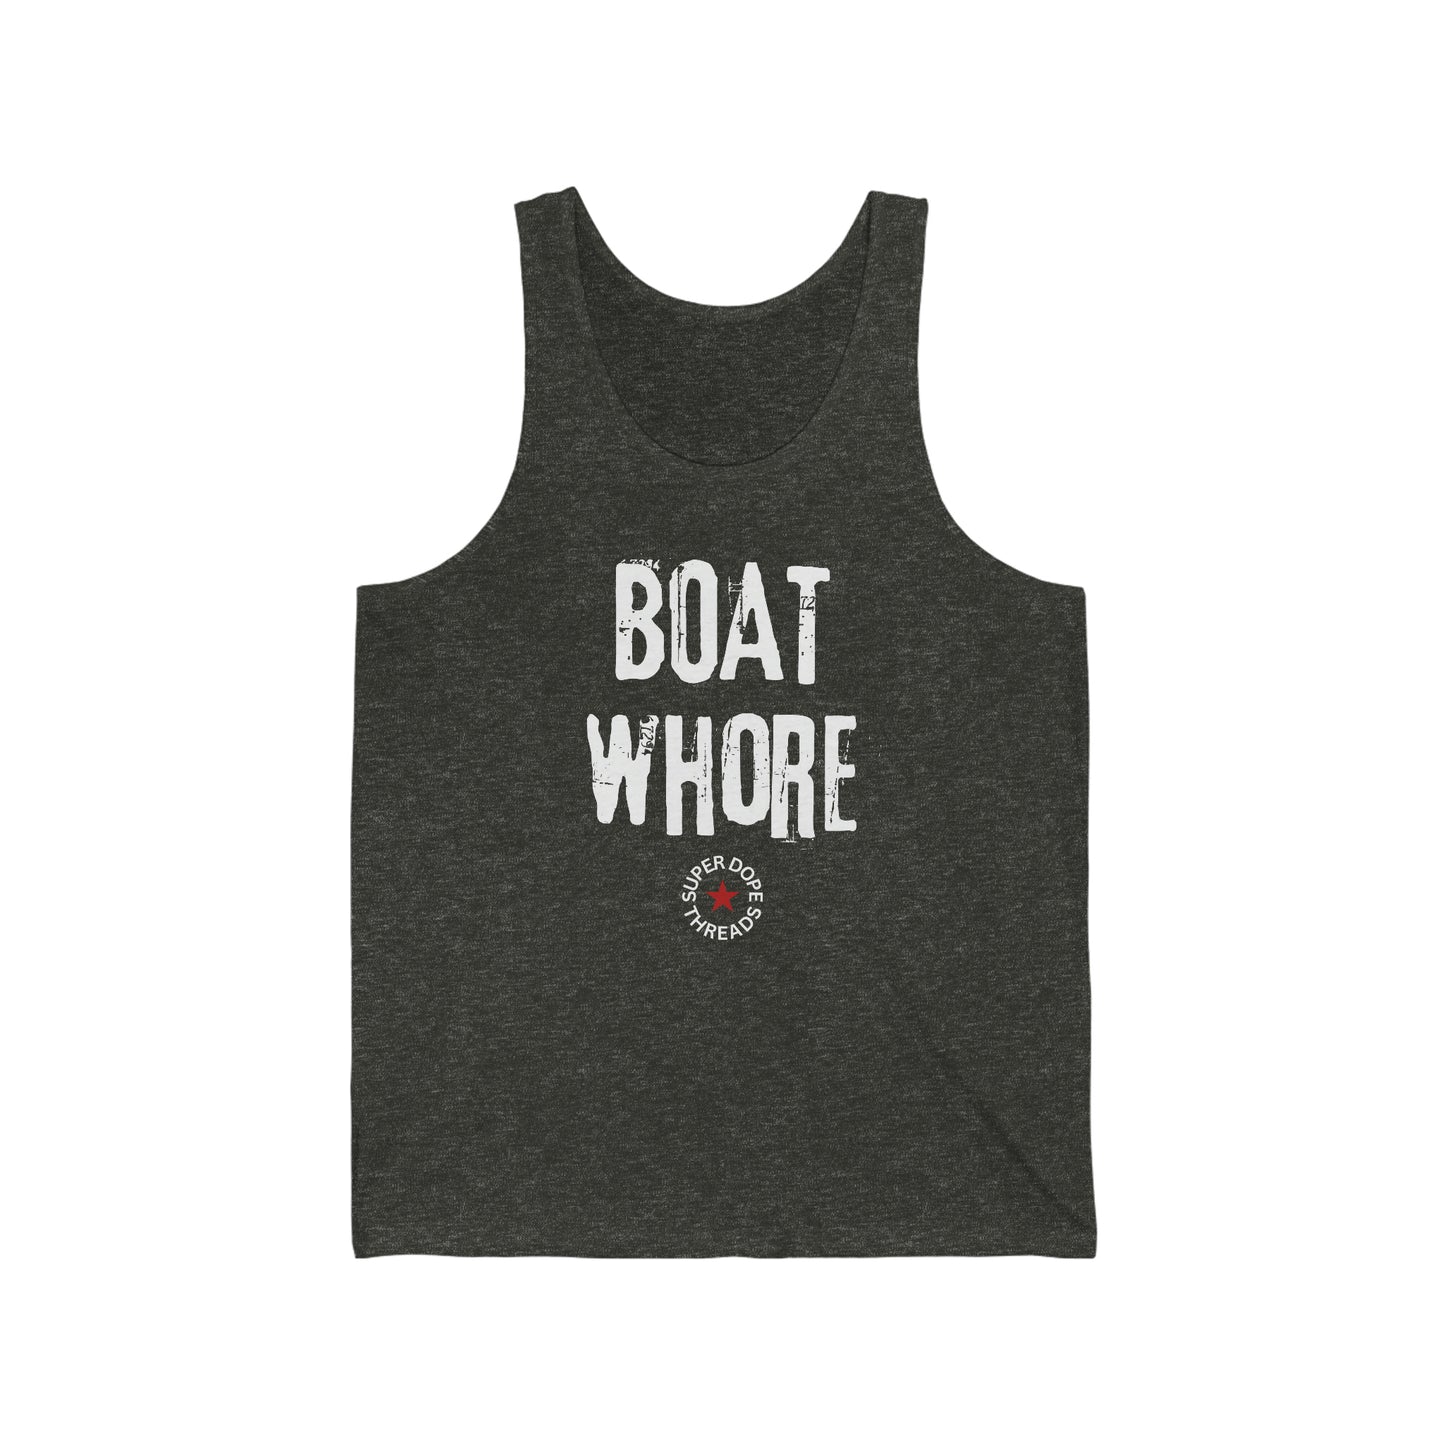 Super Dope Threads - Boat Whore Tank